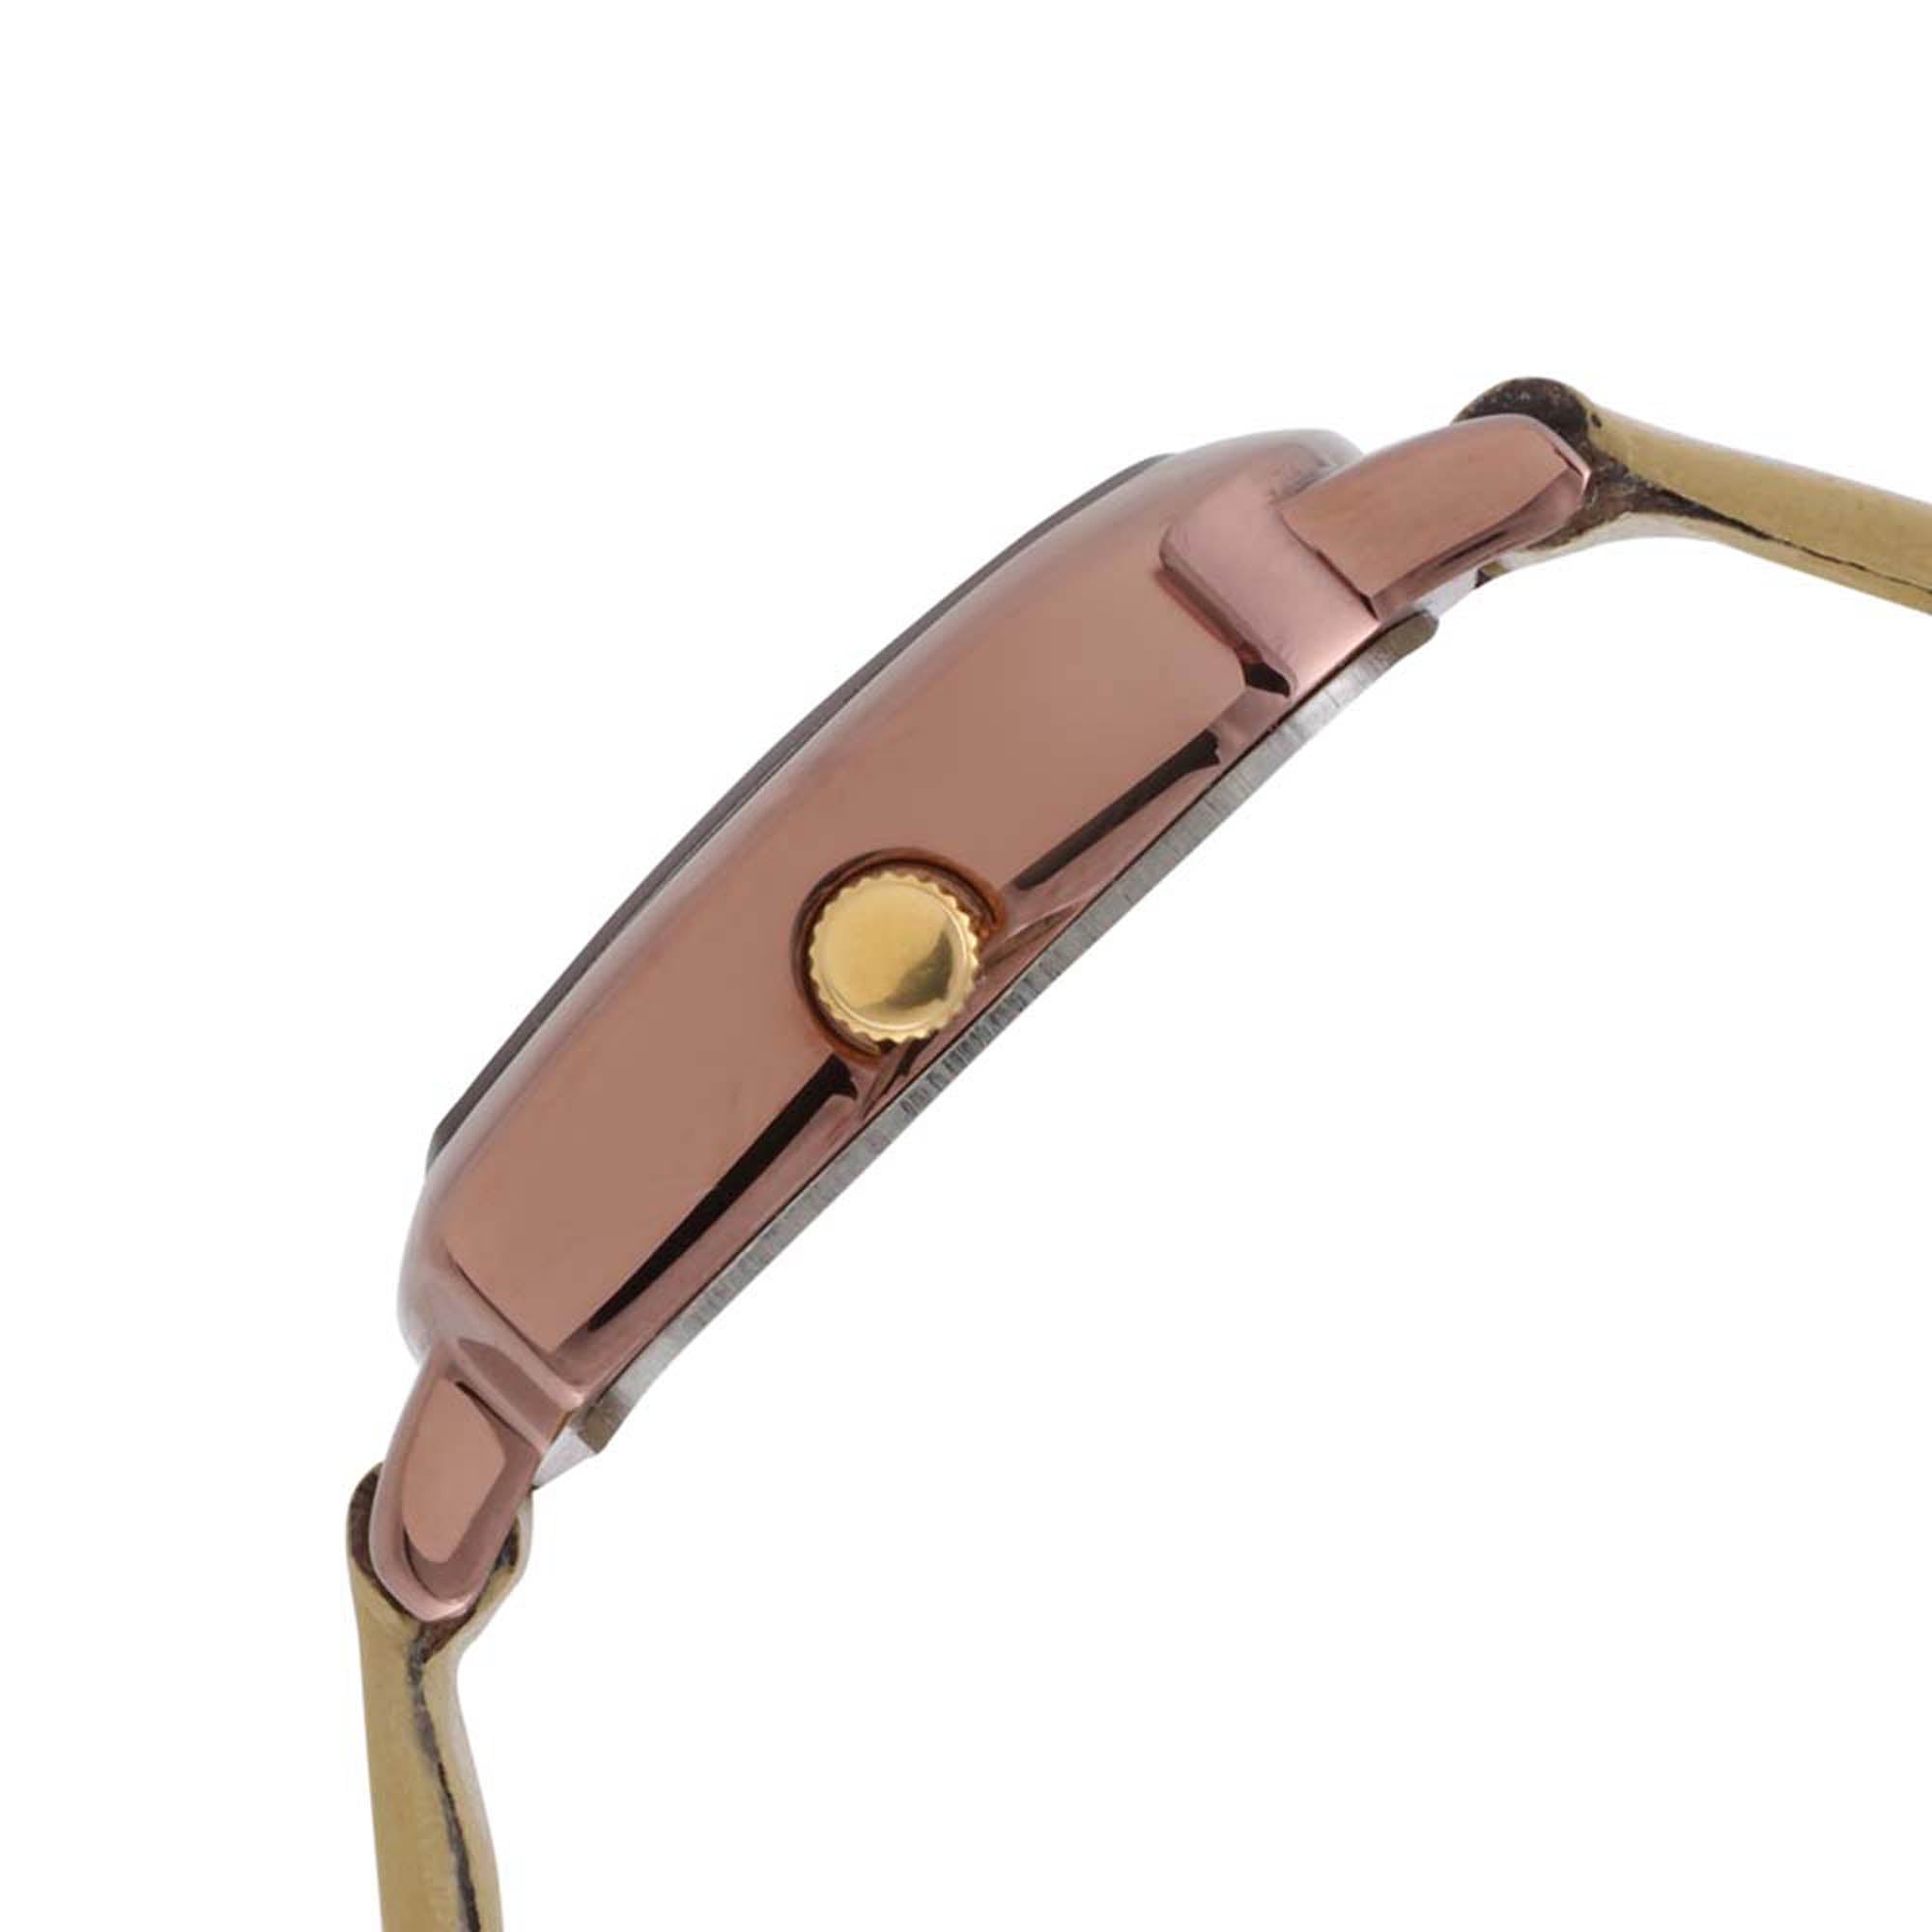 Sonata Quartz Analog Pink Dial Leather Strap Watch for Women